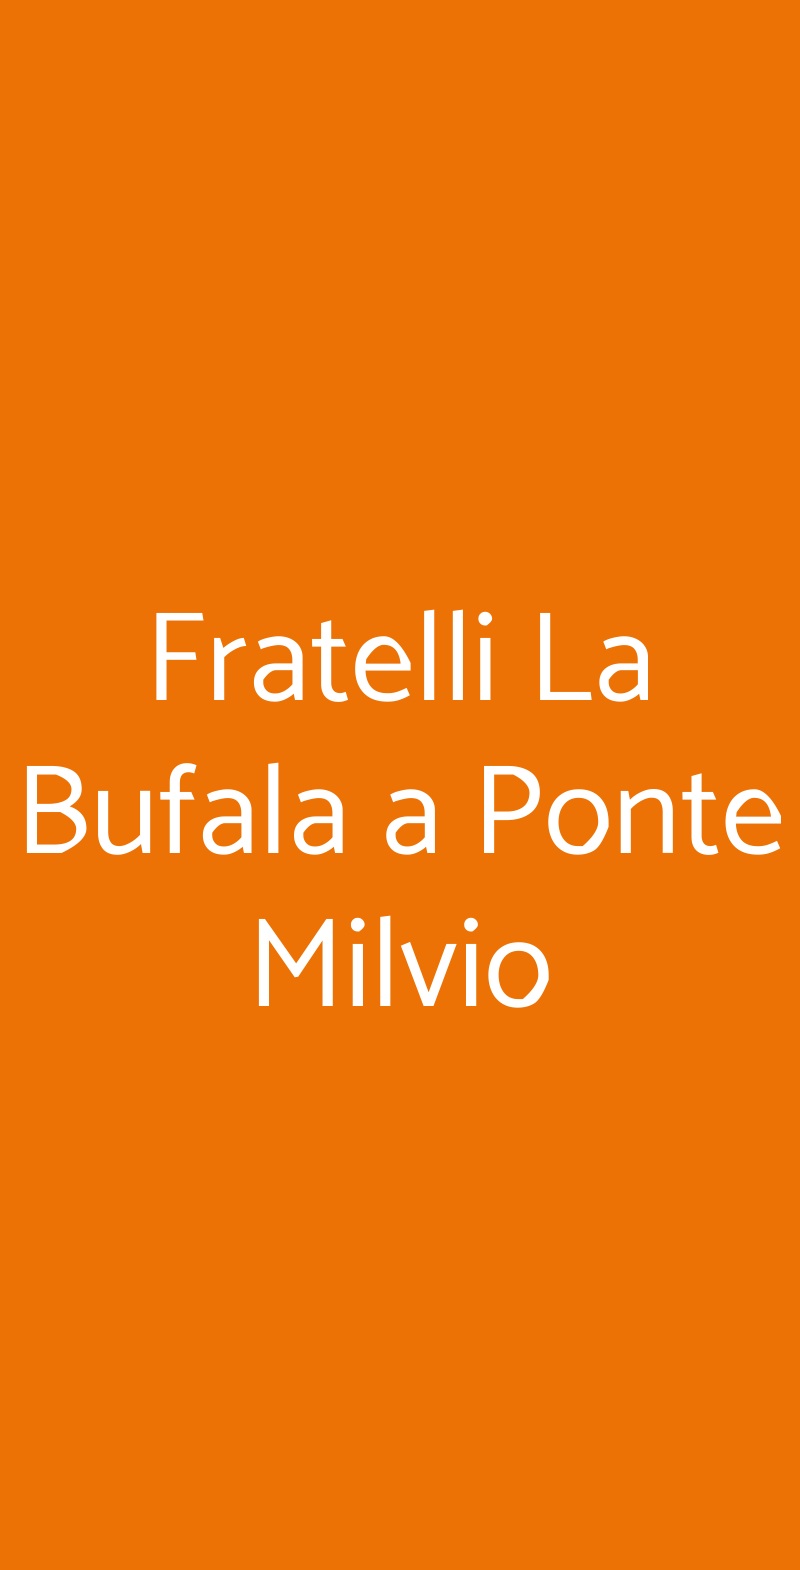 Fratelli La Bufala a Ponte Milvio Roma menù 1 pagina